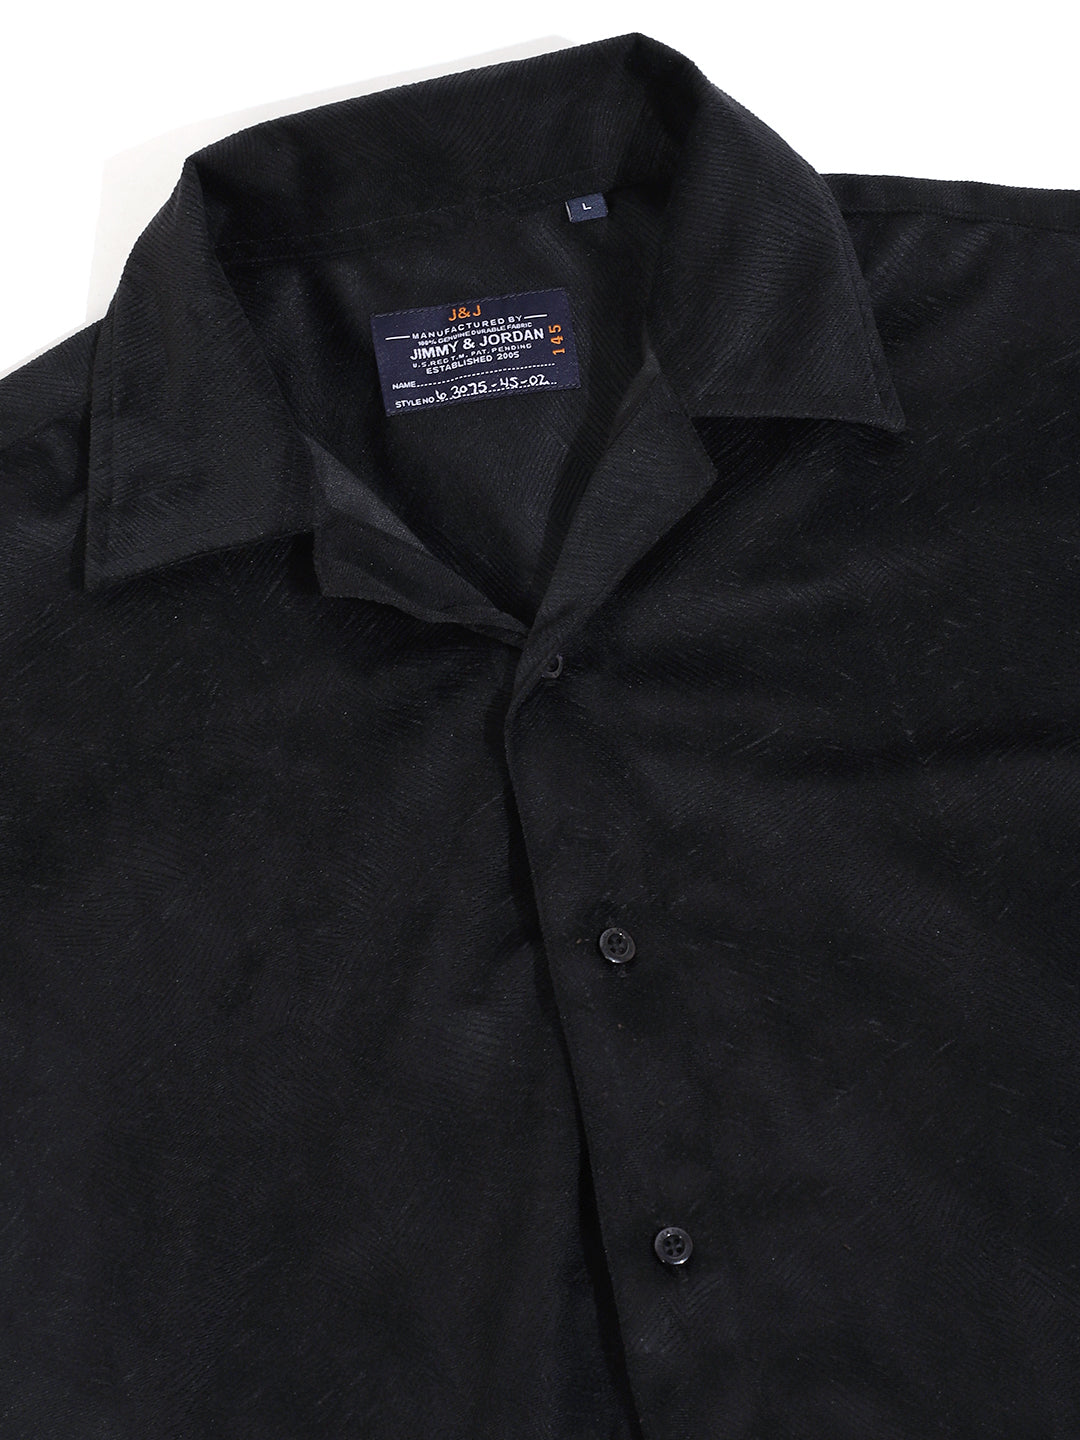 Black Corduroy Velvet Half Sleeve Shirt